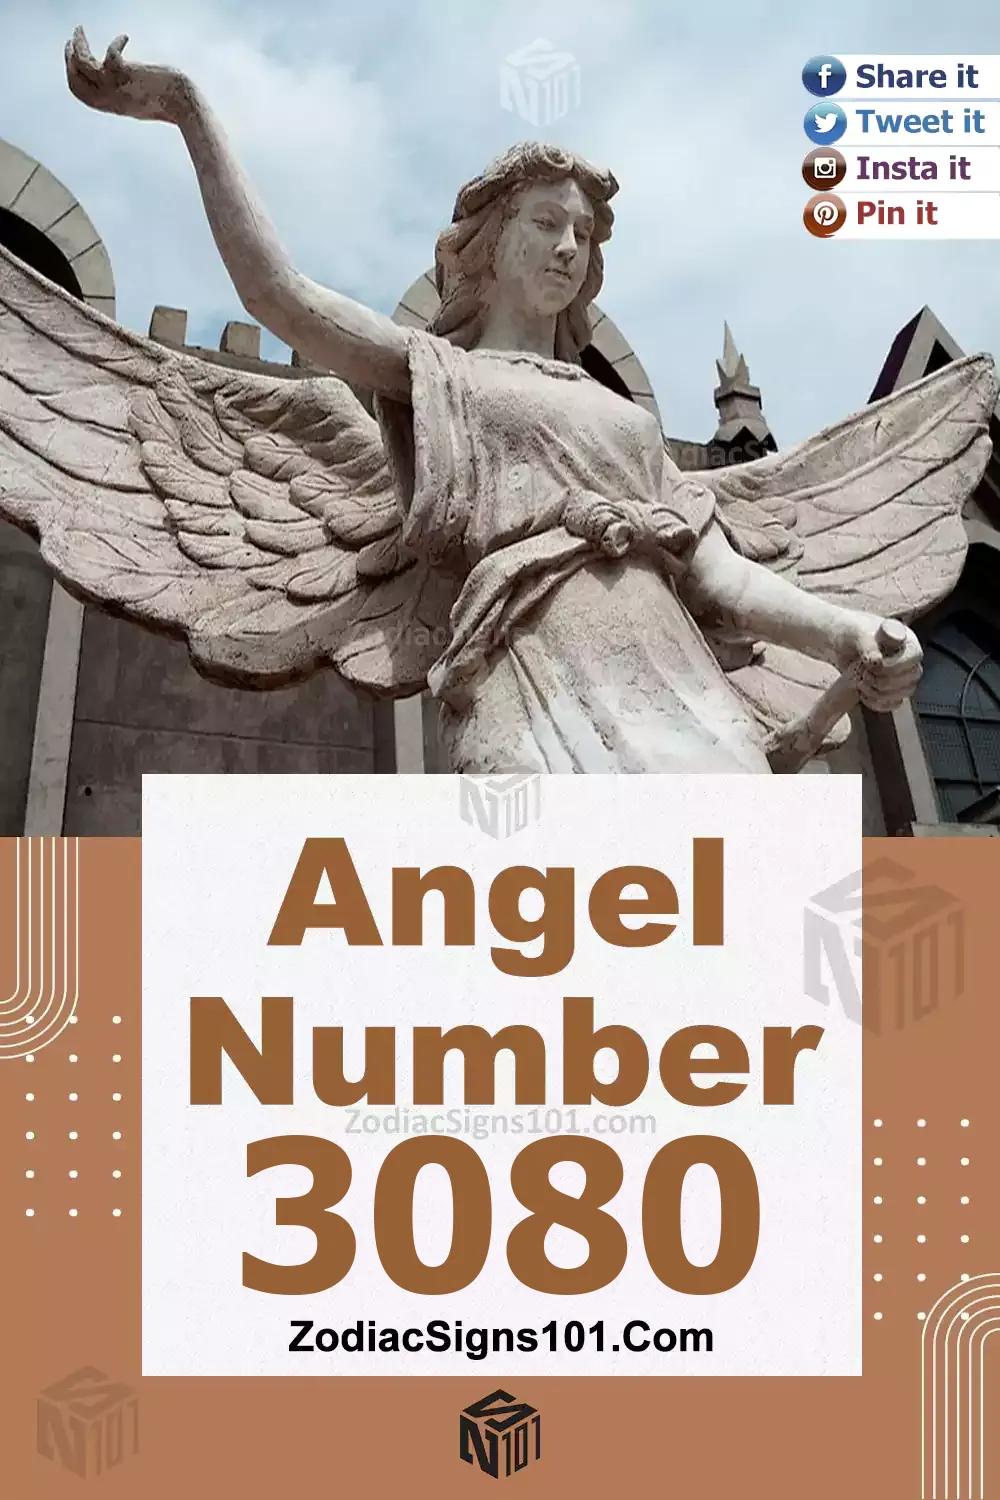 3080-Angel-Number-Meaning.jpg